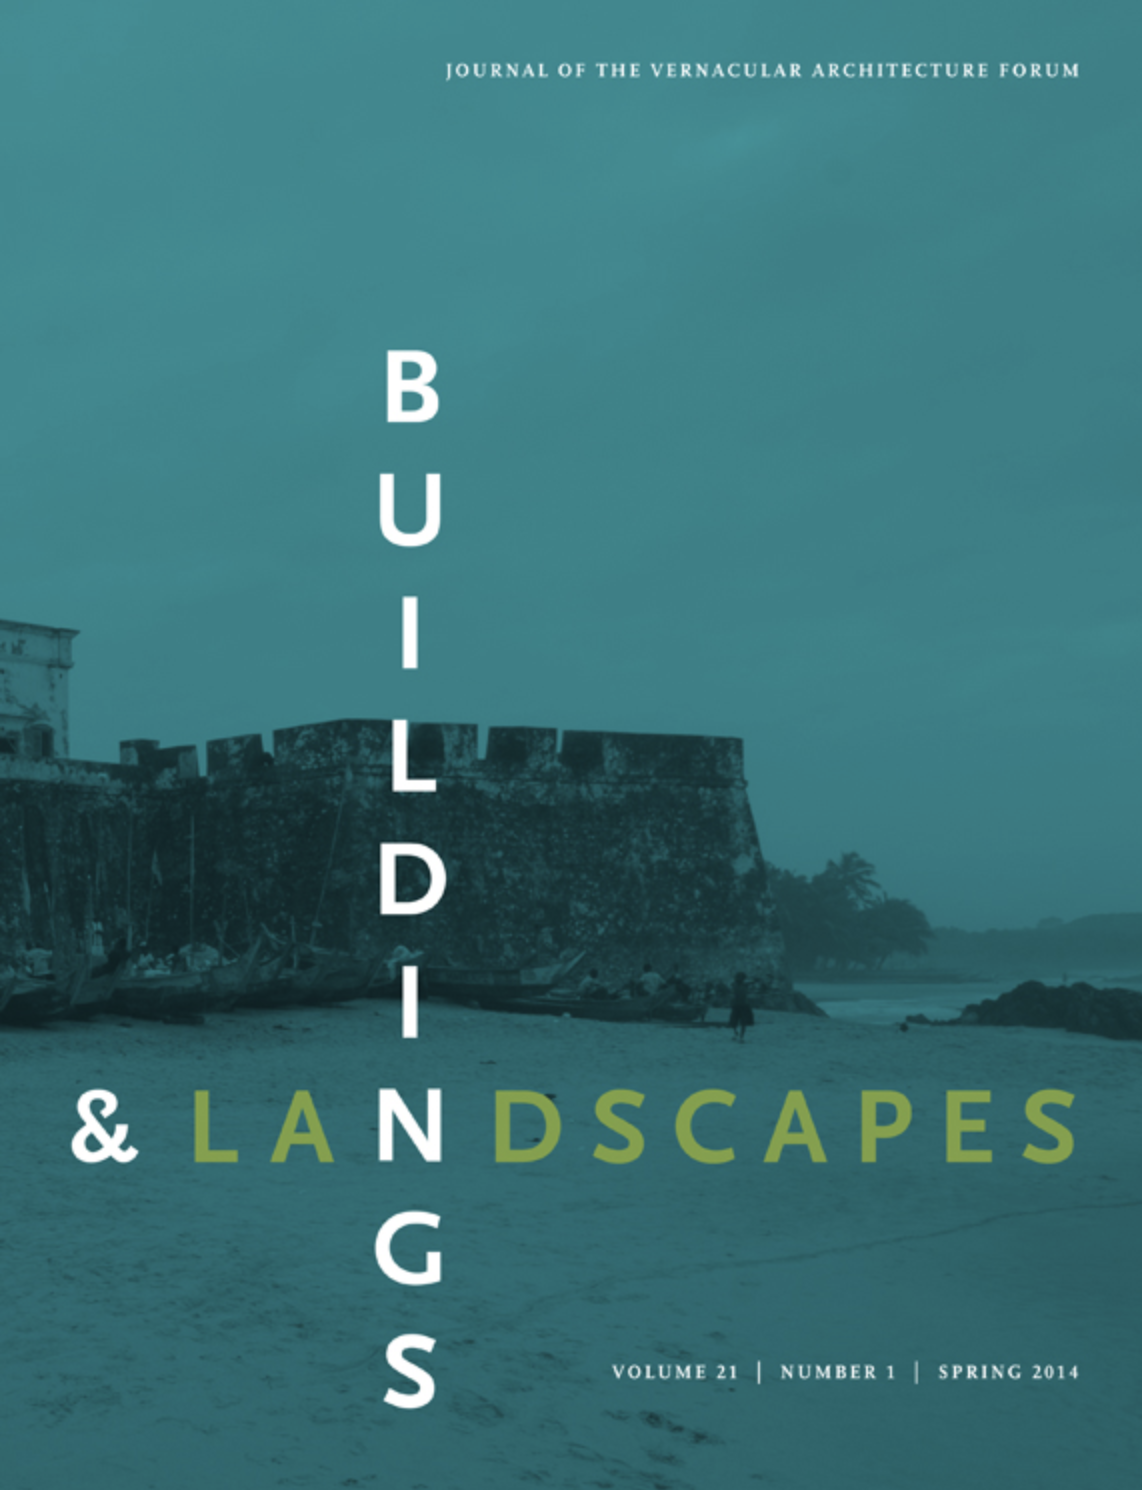 Buildings & Landscapes Vol 21, No 1 (Spring 2014) cover.